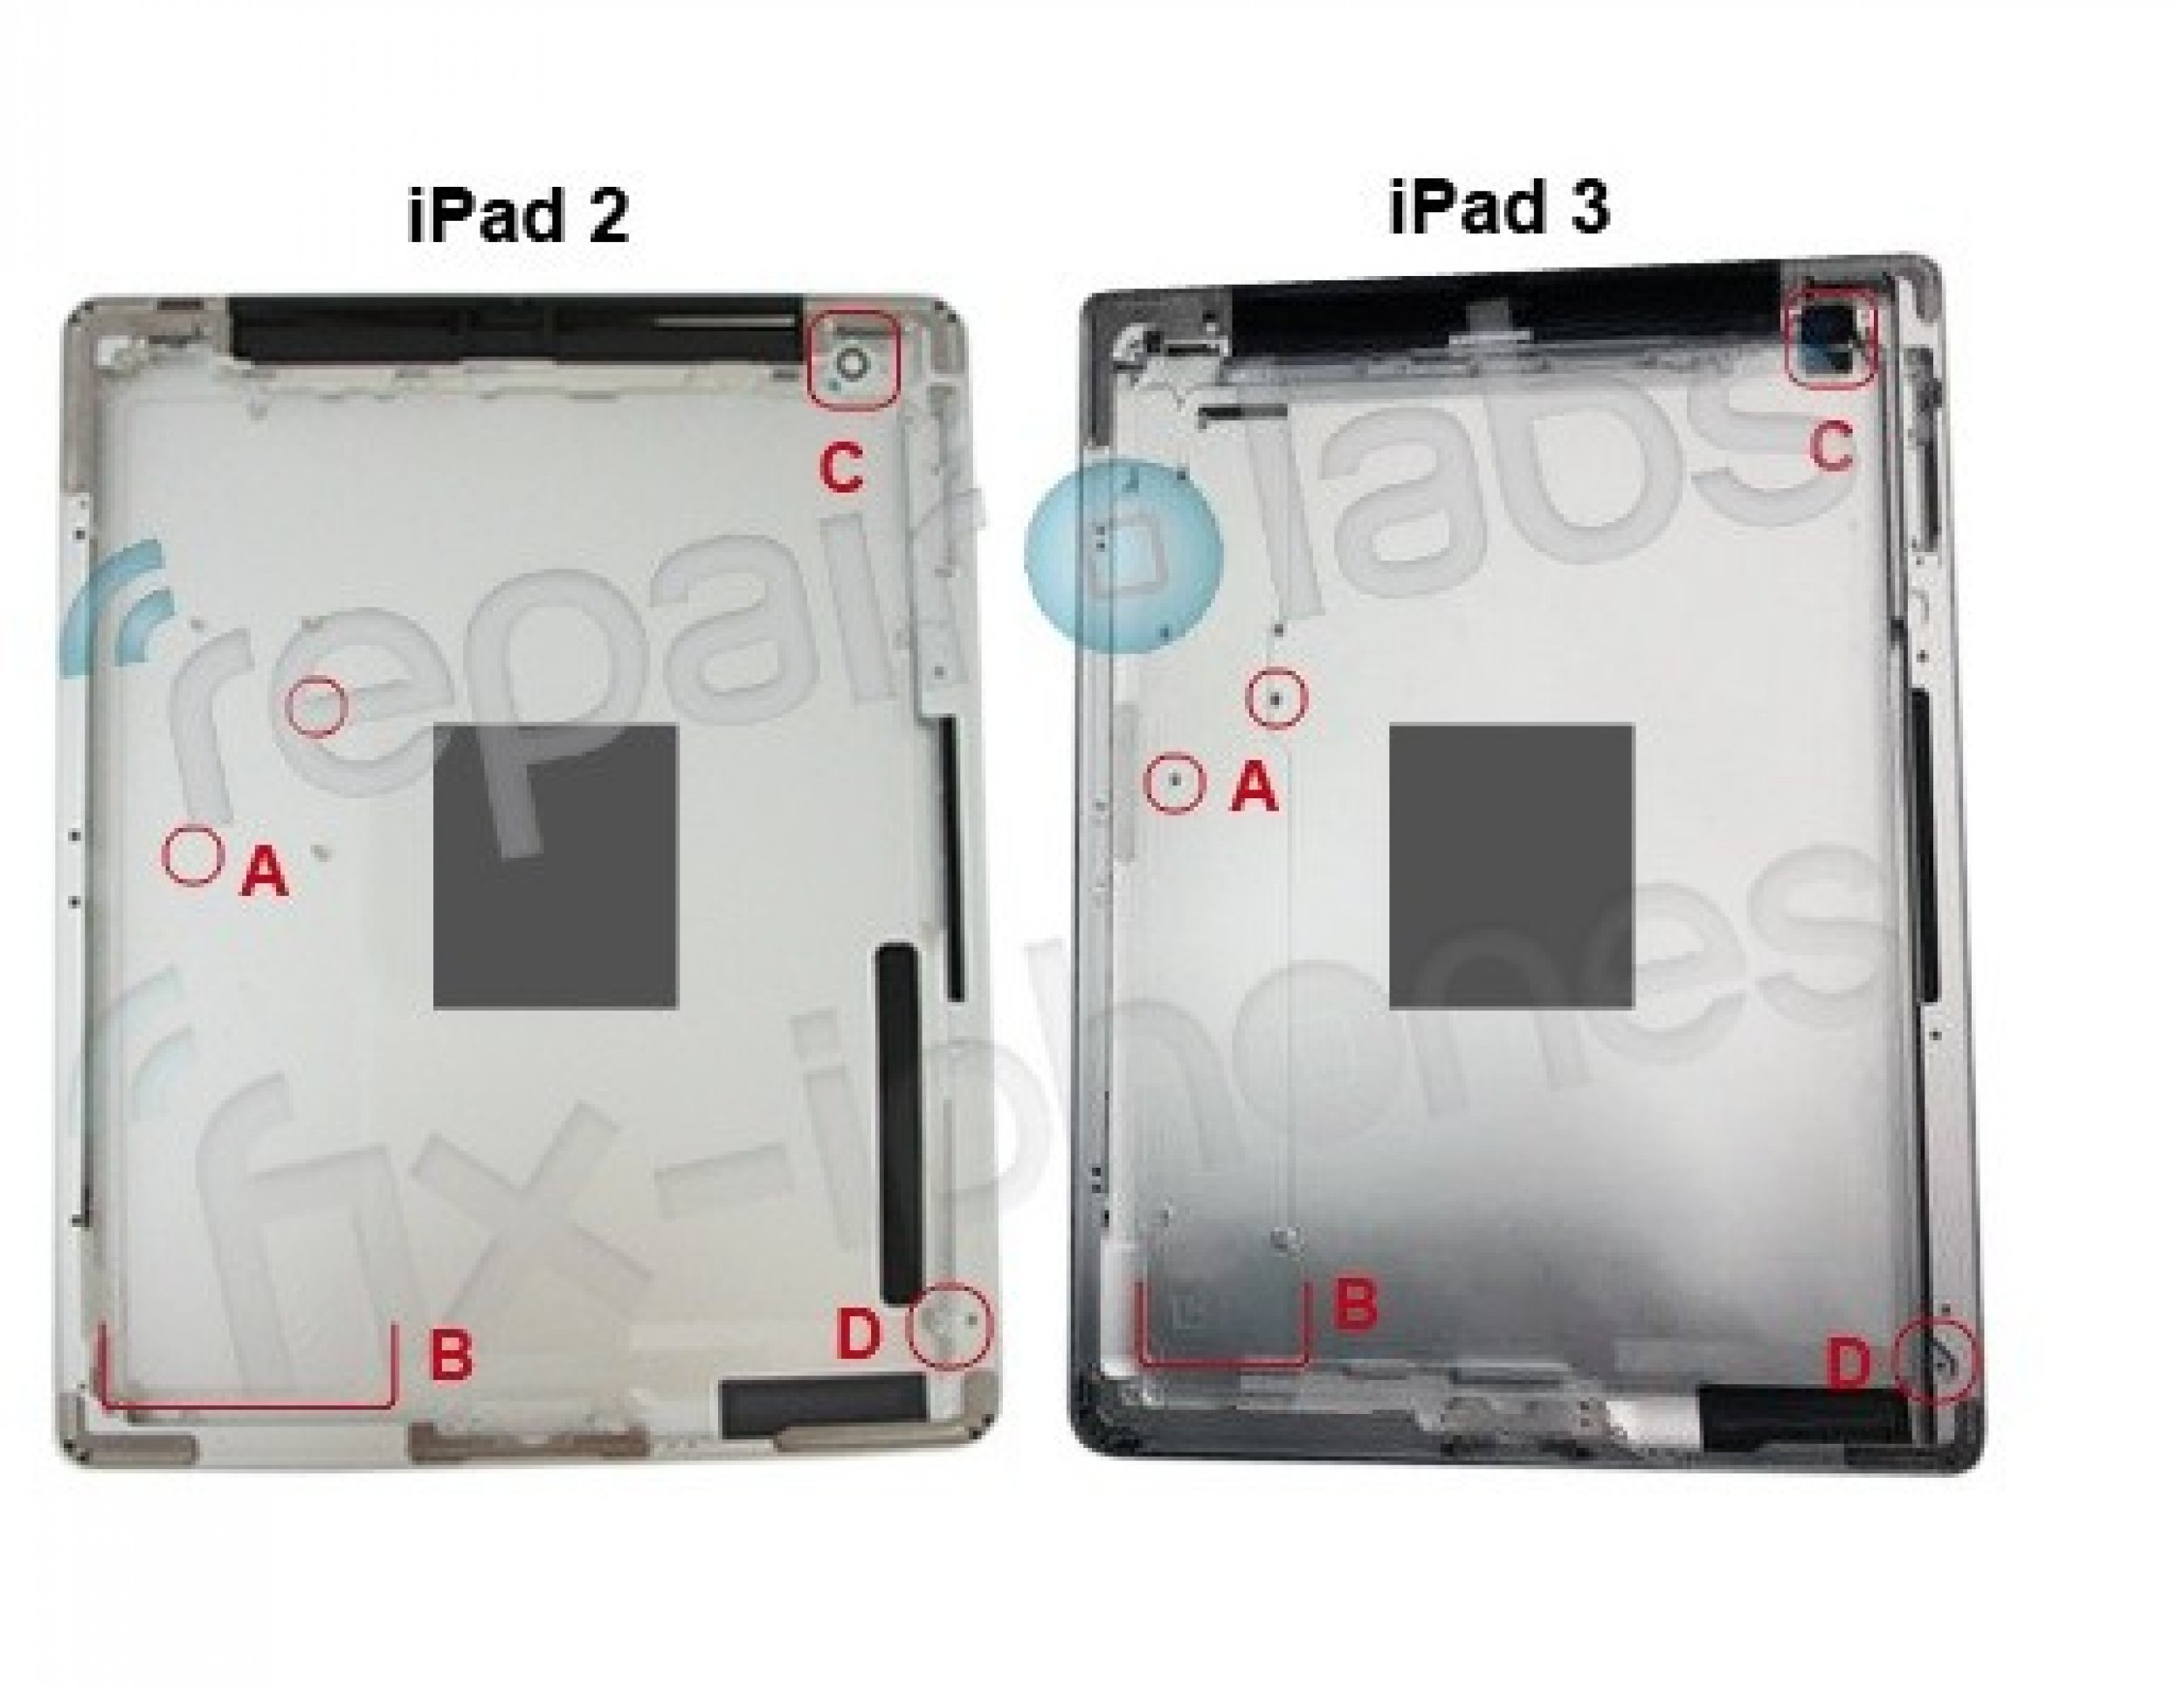 iPad 3 Release Back Panel Revealed Rumor Larger Battery